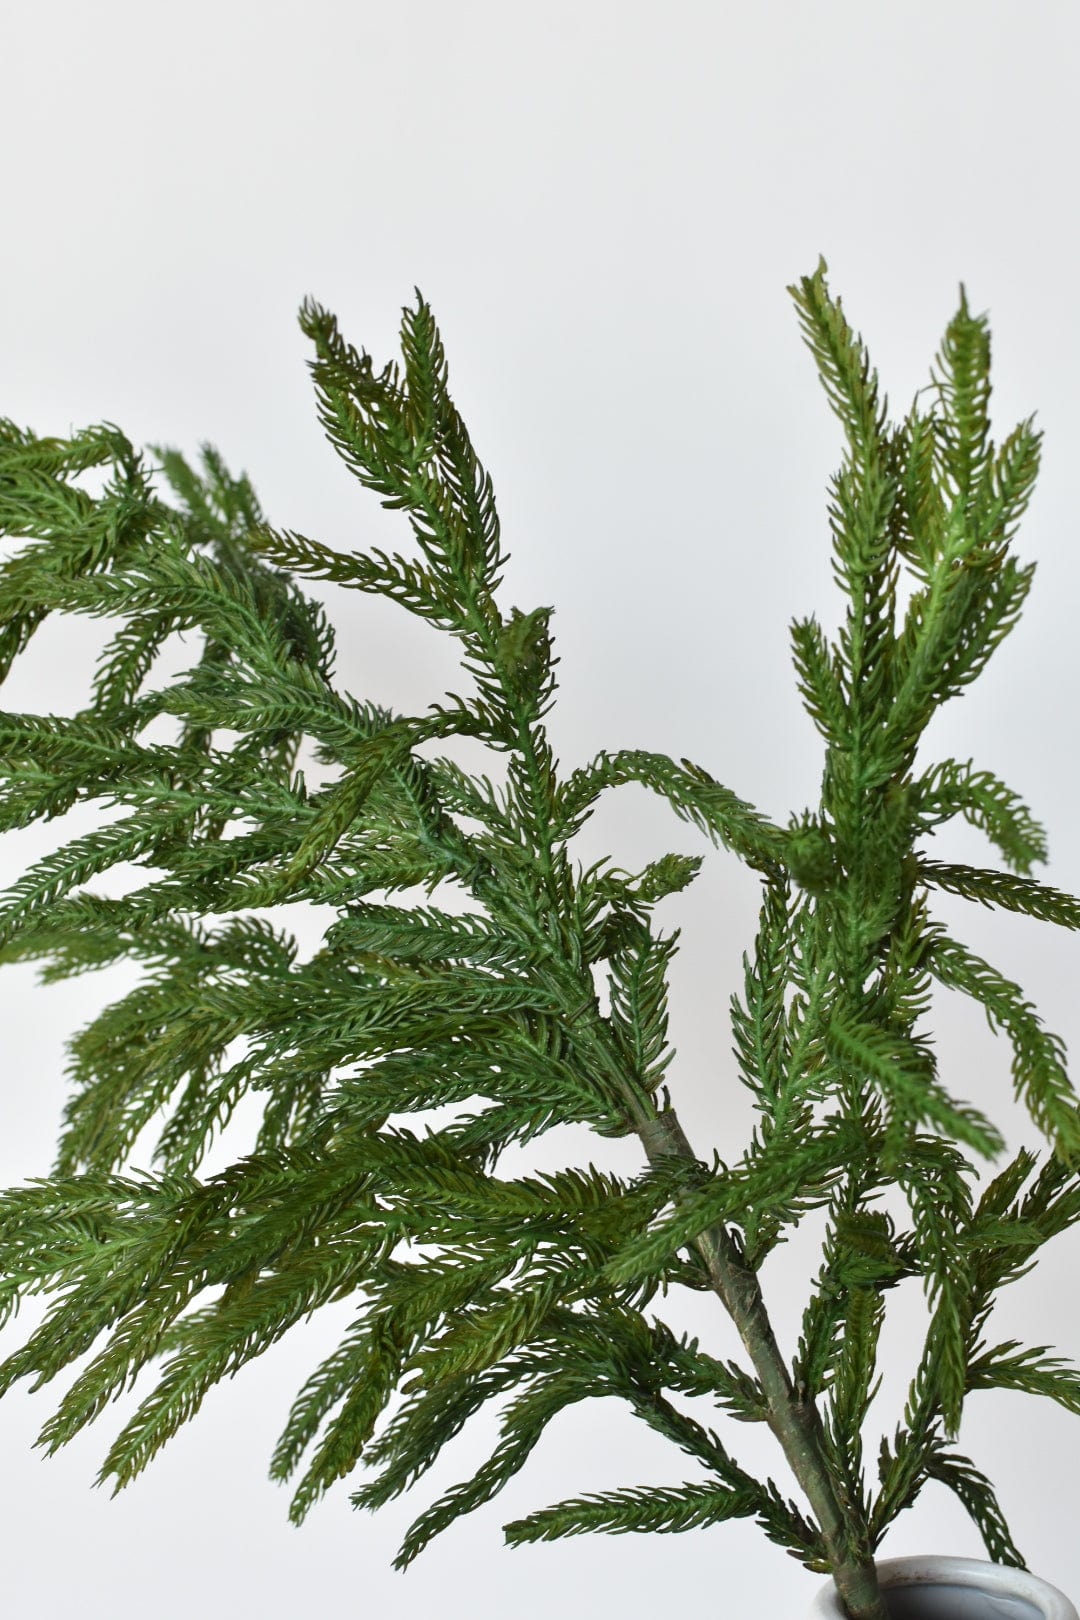 37 Realistic Dried Norfolk Pine Branch Stem/Spray